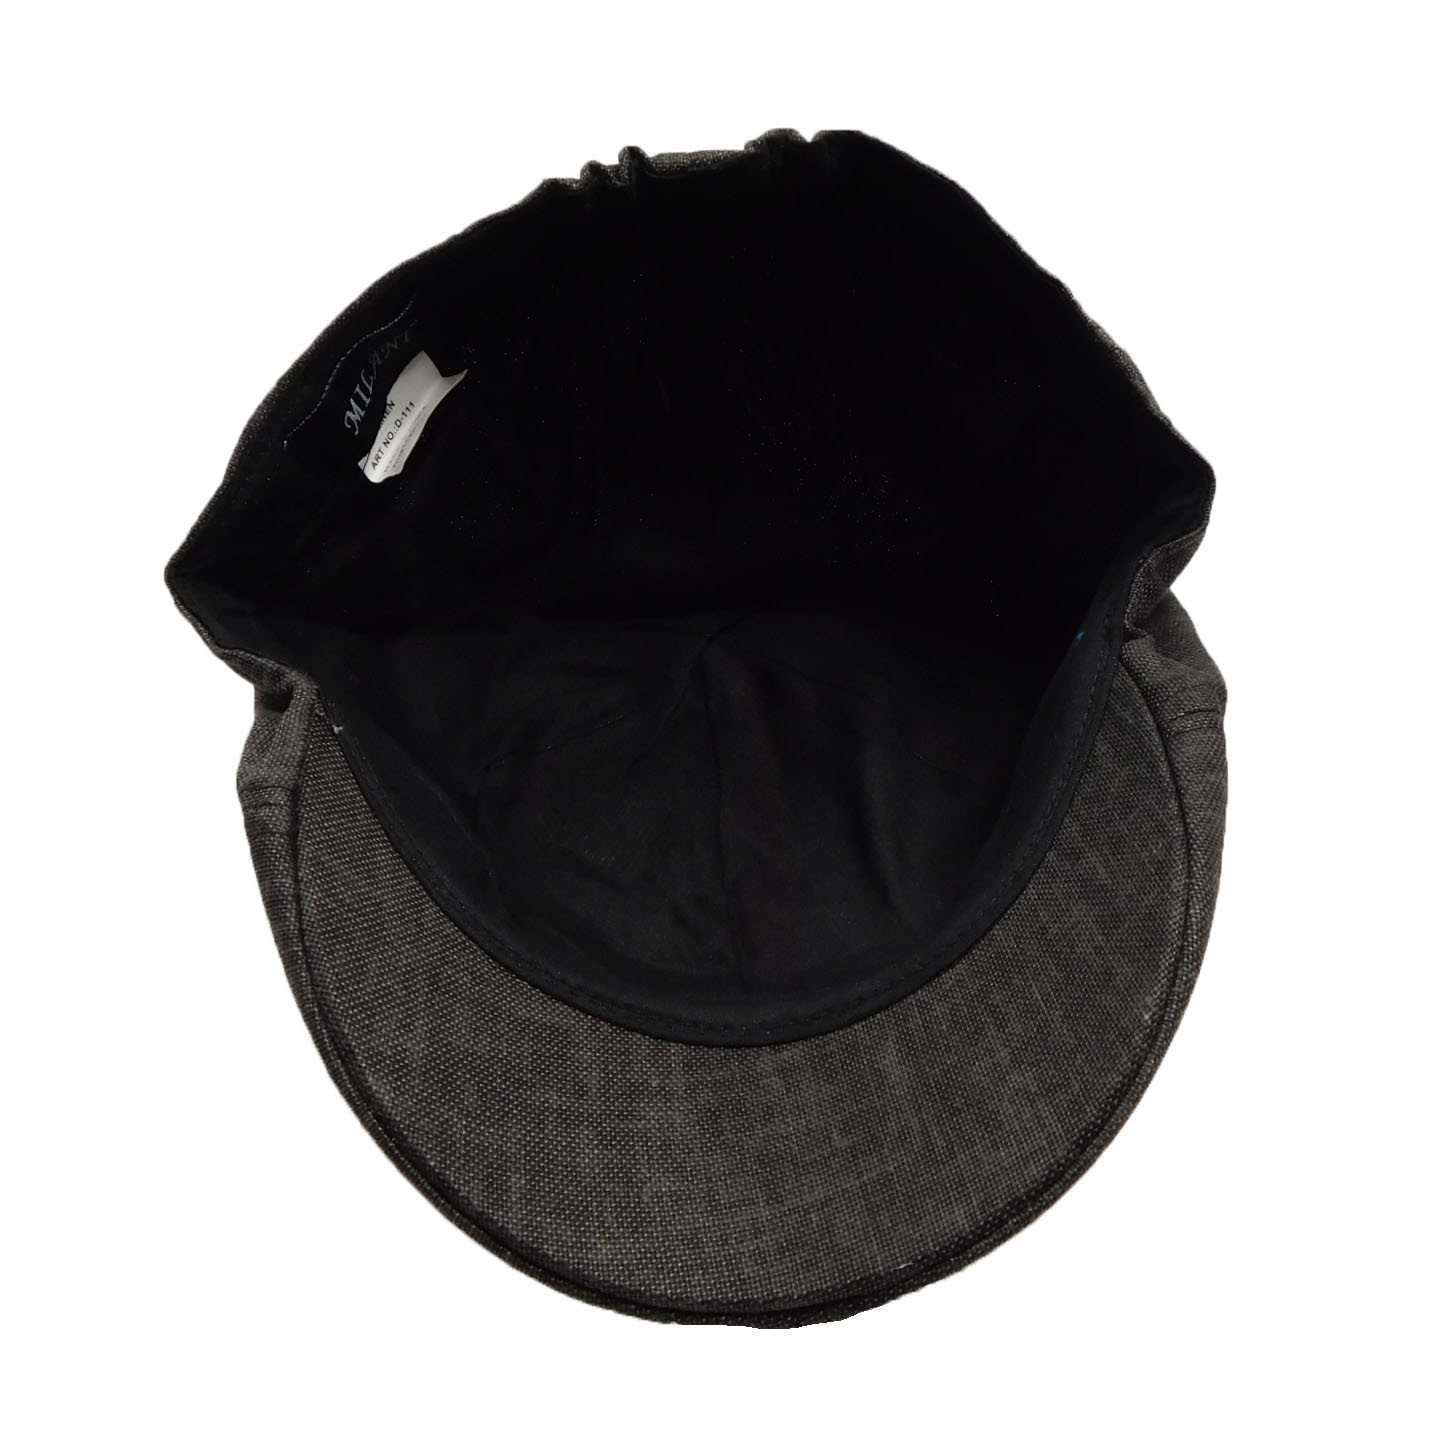 Duckbill Linen Ivy Cap by Milani, Flat Cap - SetarTrading Hats 